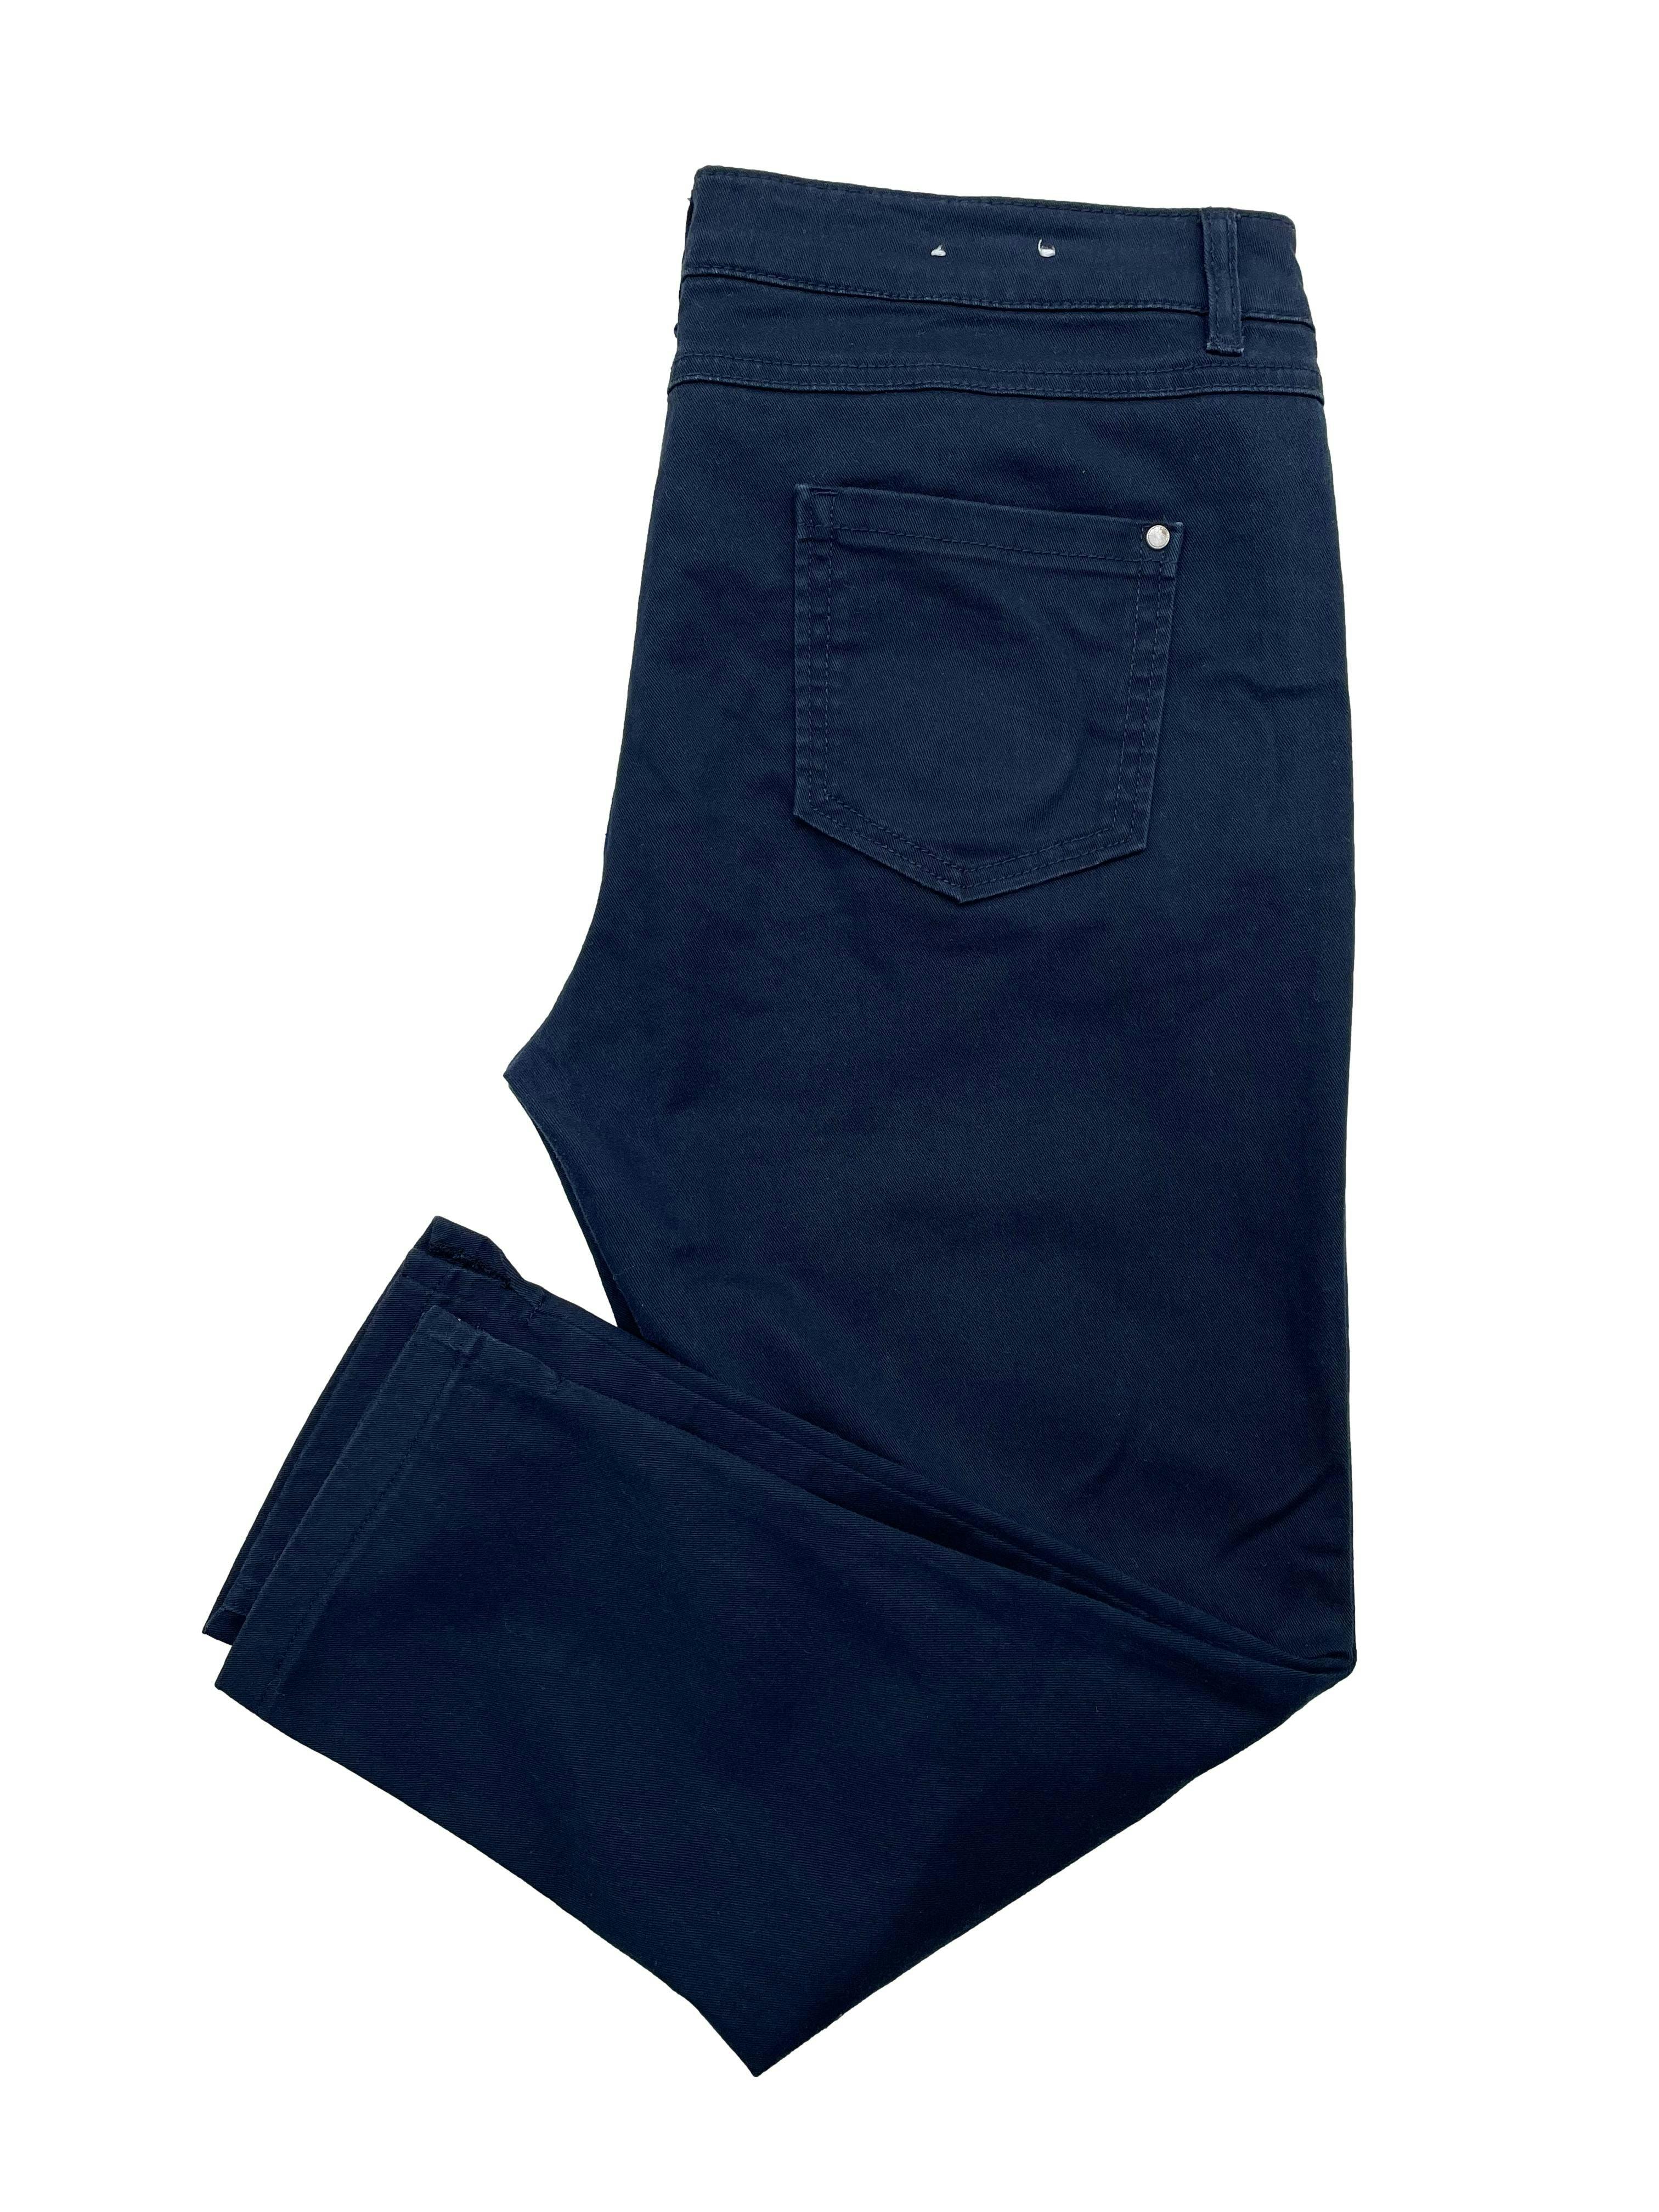 Pantalón Sfera azul marino, corte recto, five pockets y aberturas laterales. Cintura 90cm, Tiro 25cm, Largo 84cm.